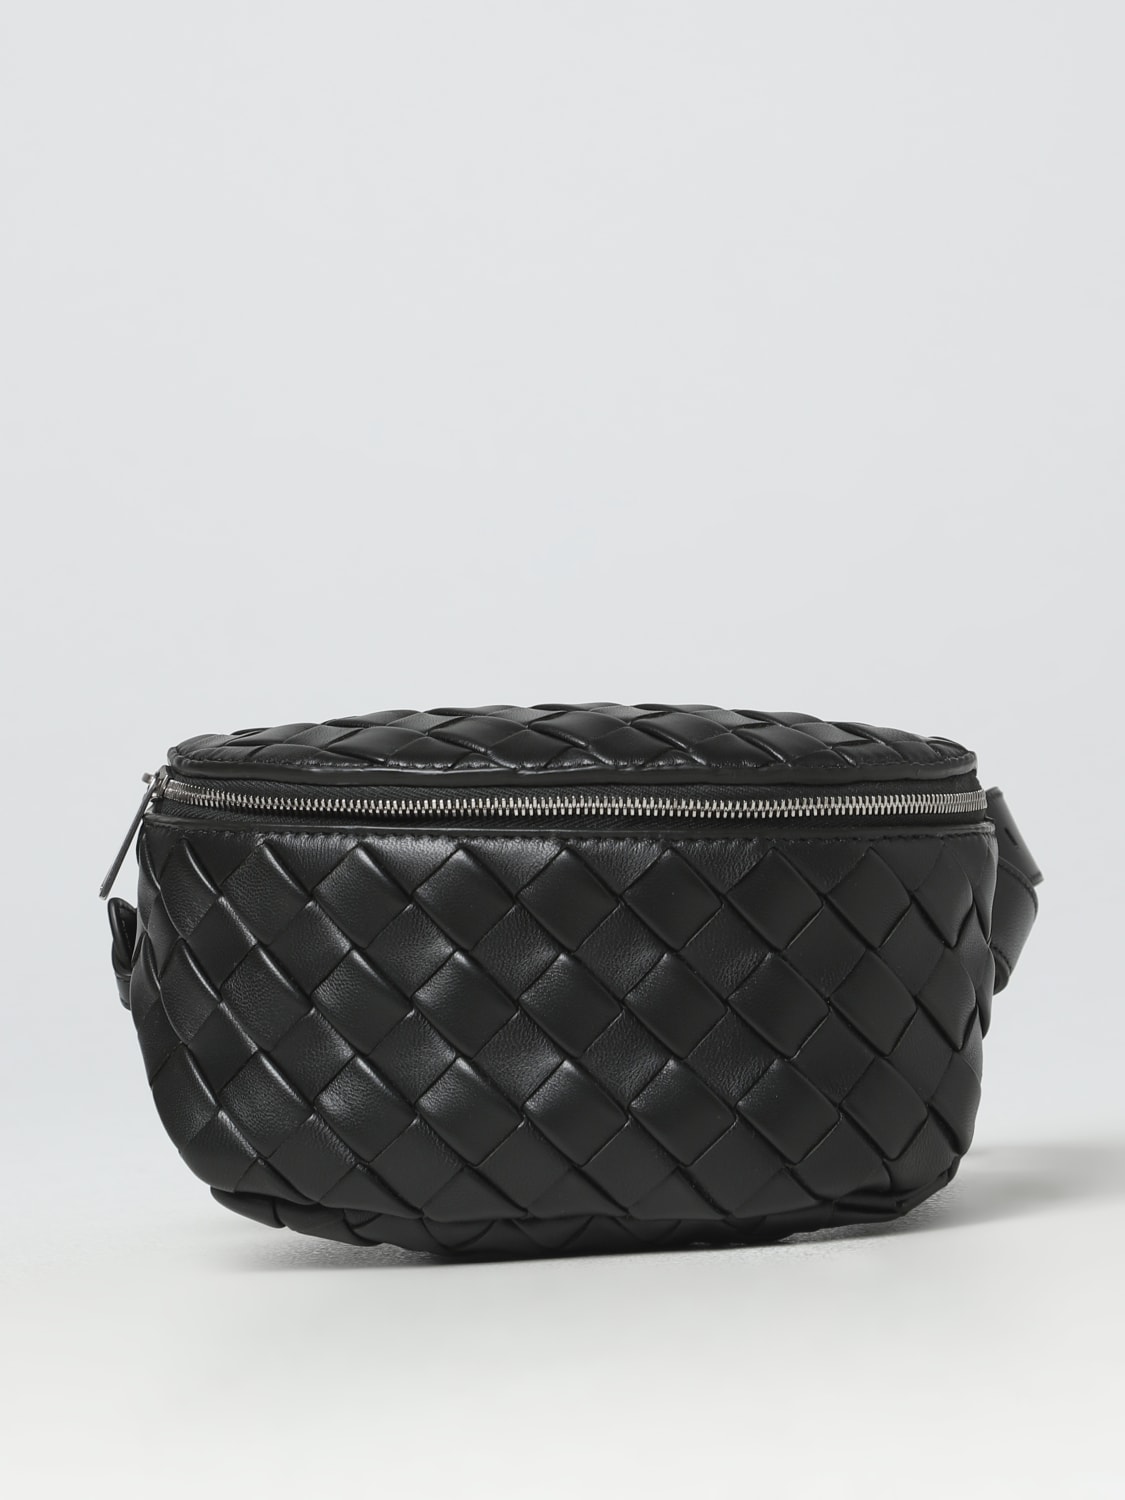 Buy Men's Leather Pouch Belts Online